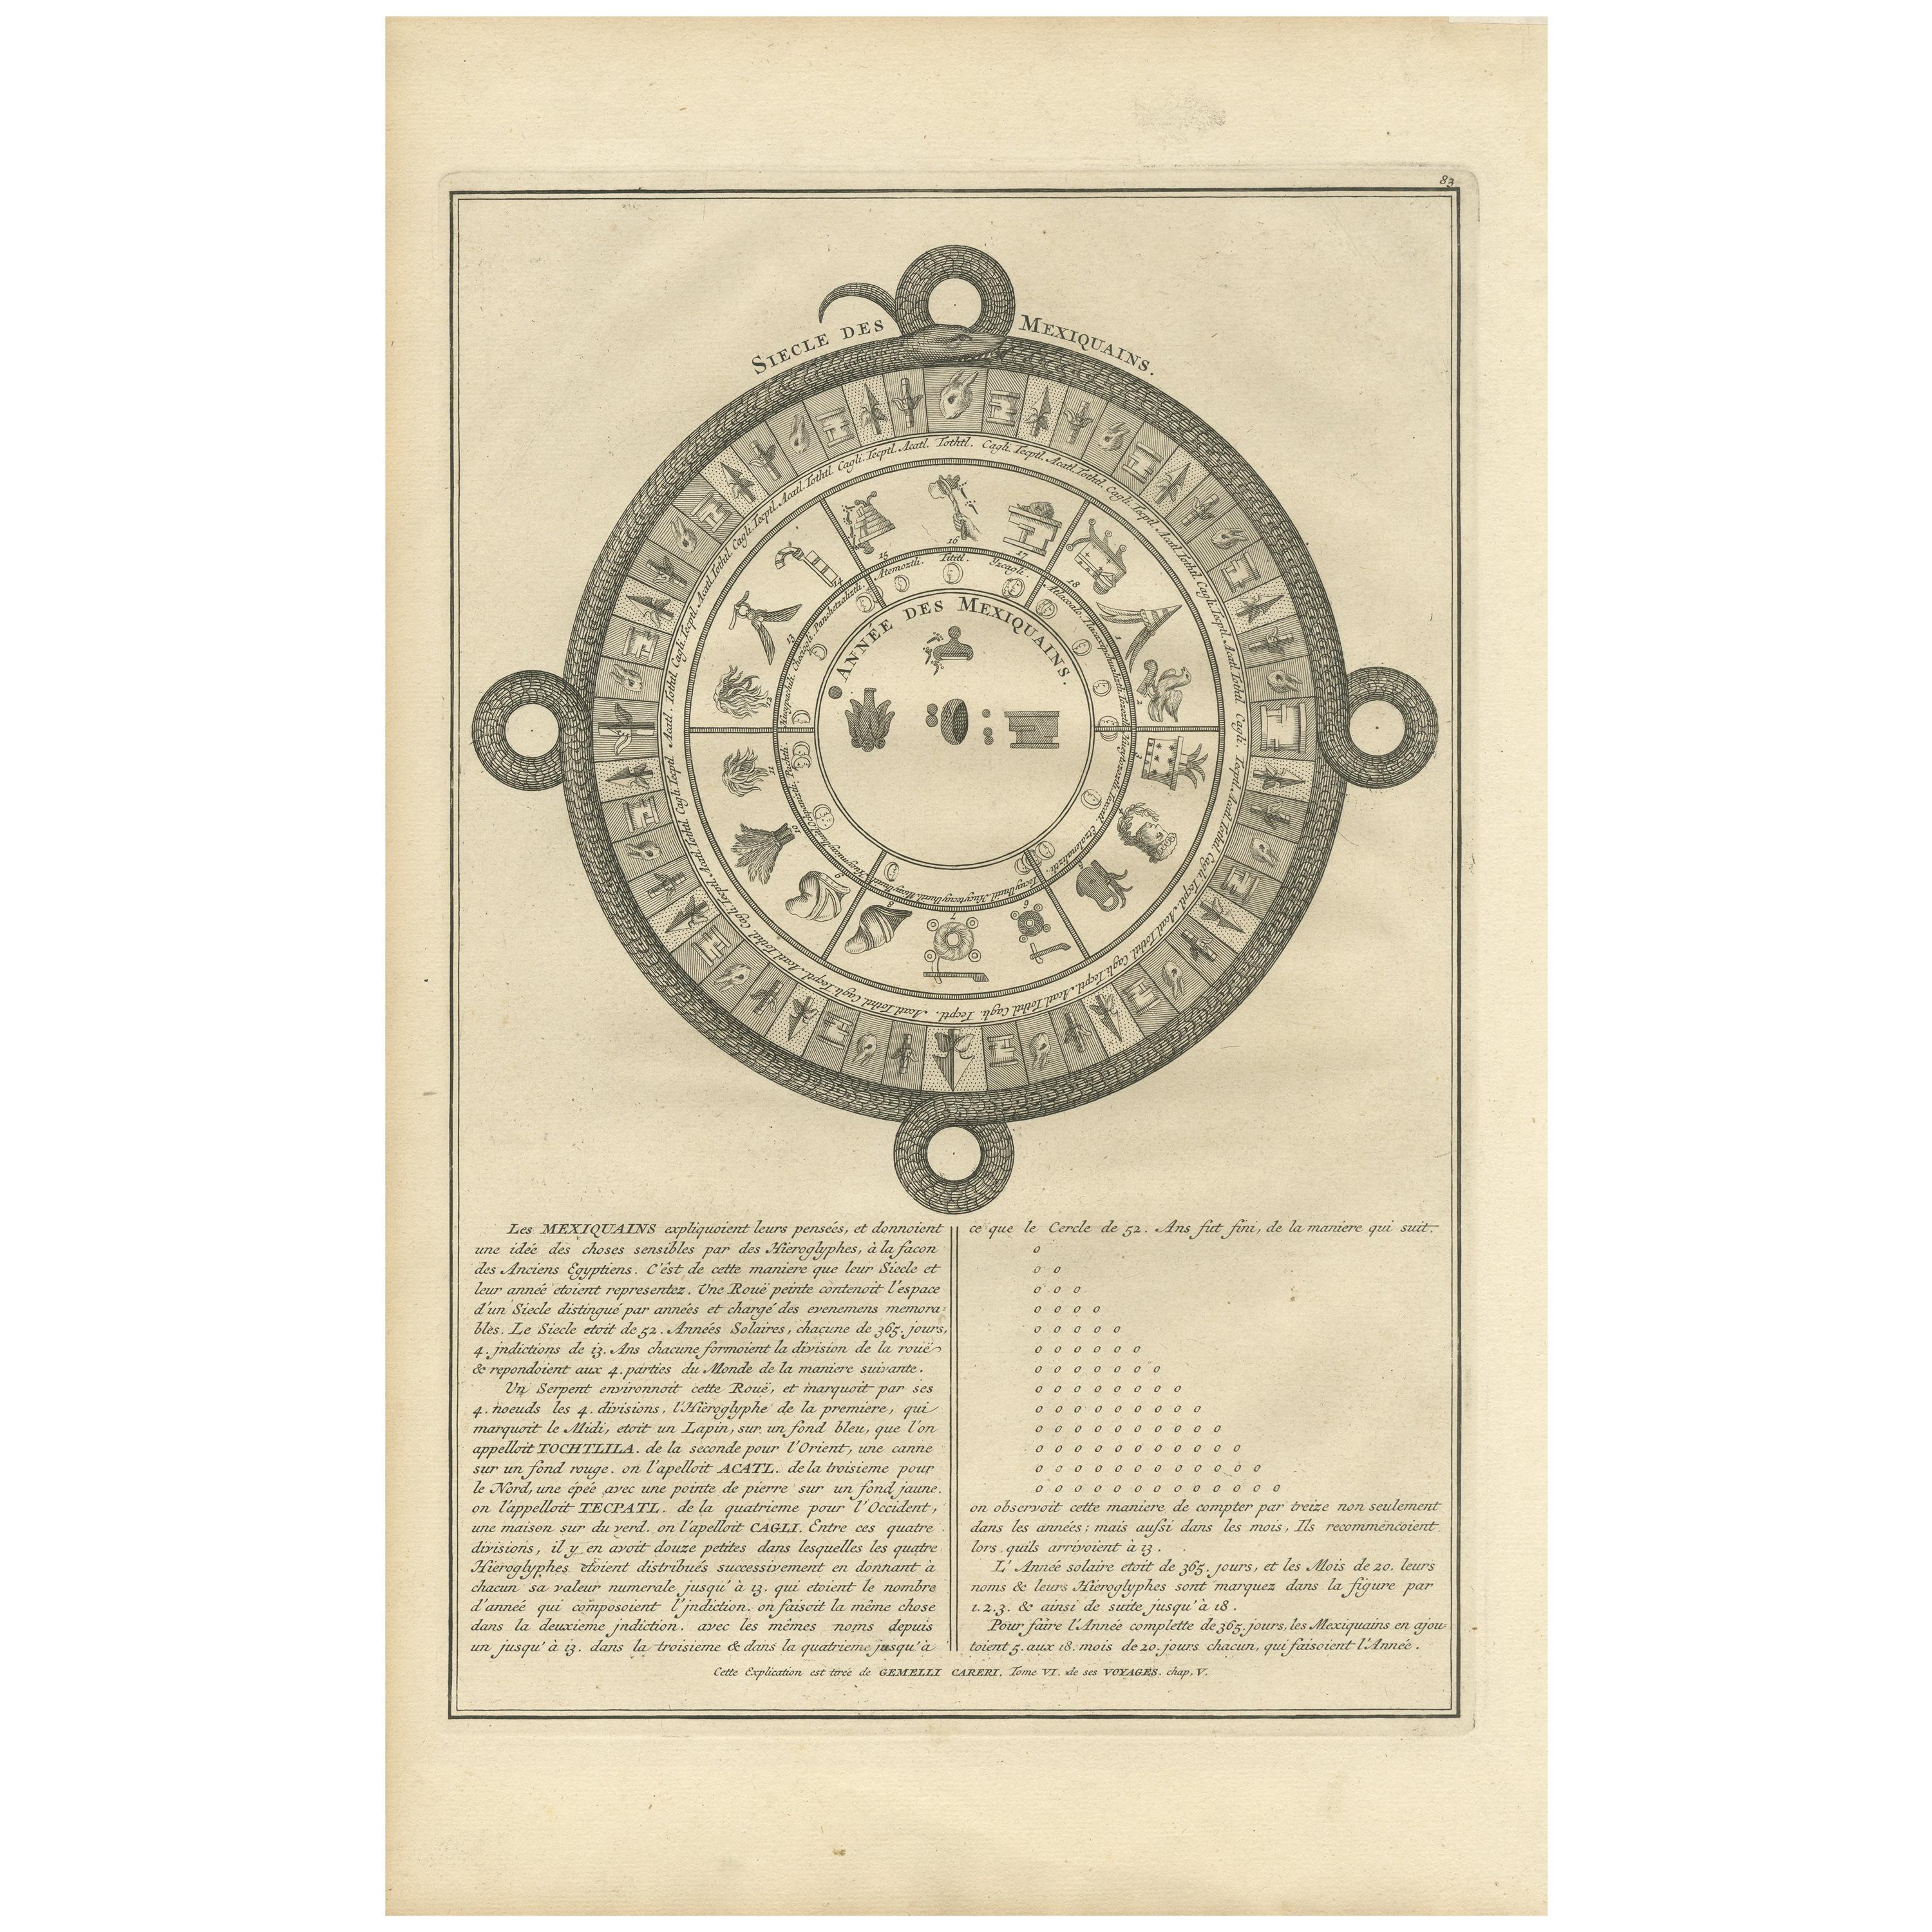 Stunning Decorative Antique Print of the Aztec Calendar, 'c.1730'